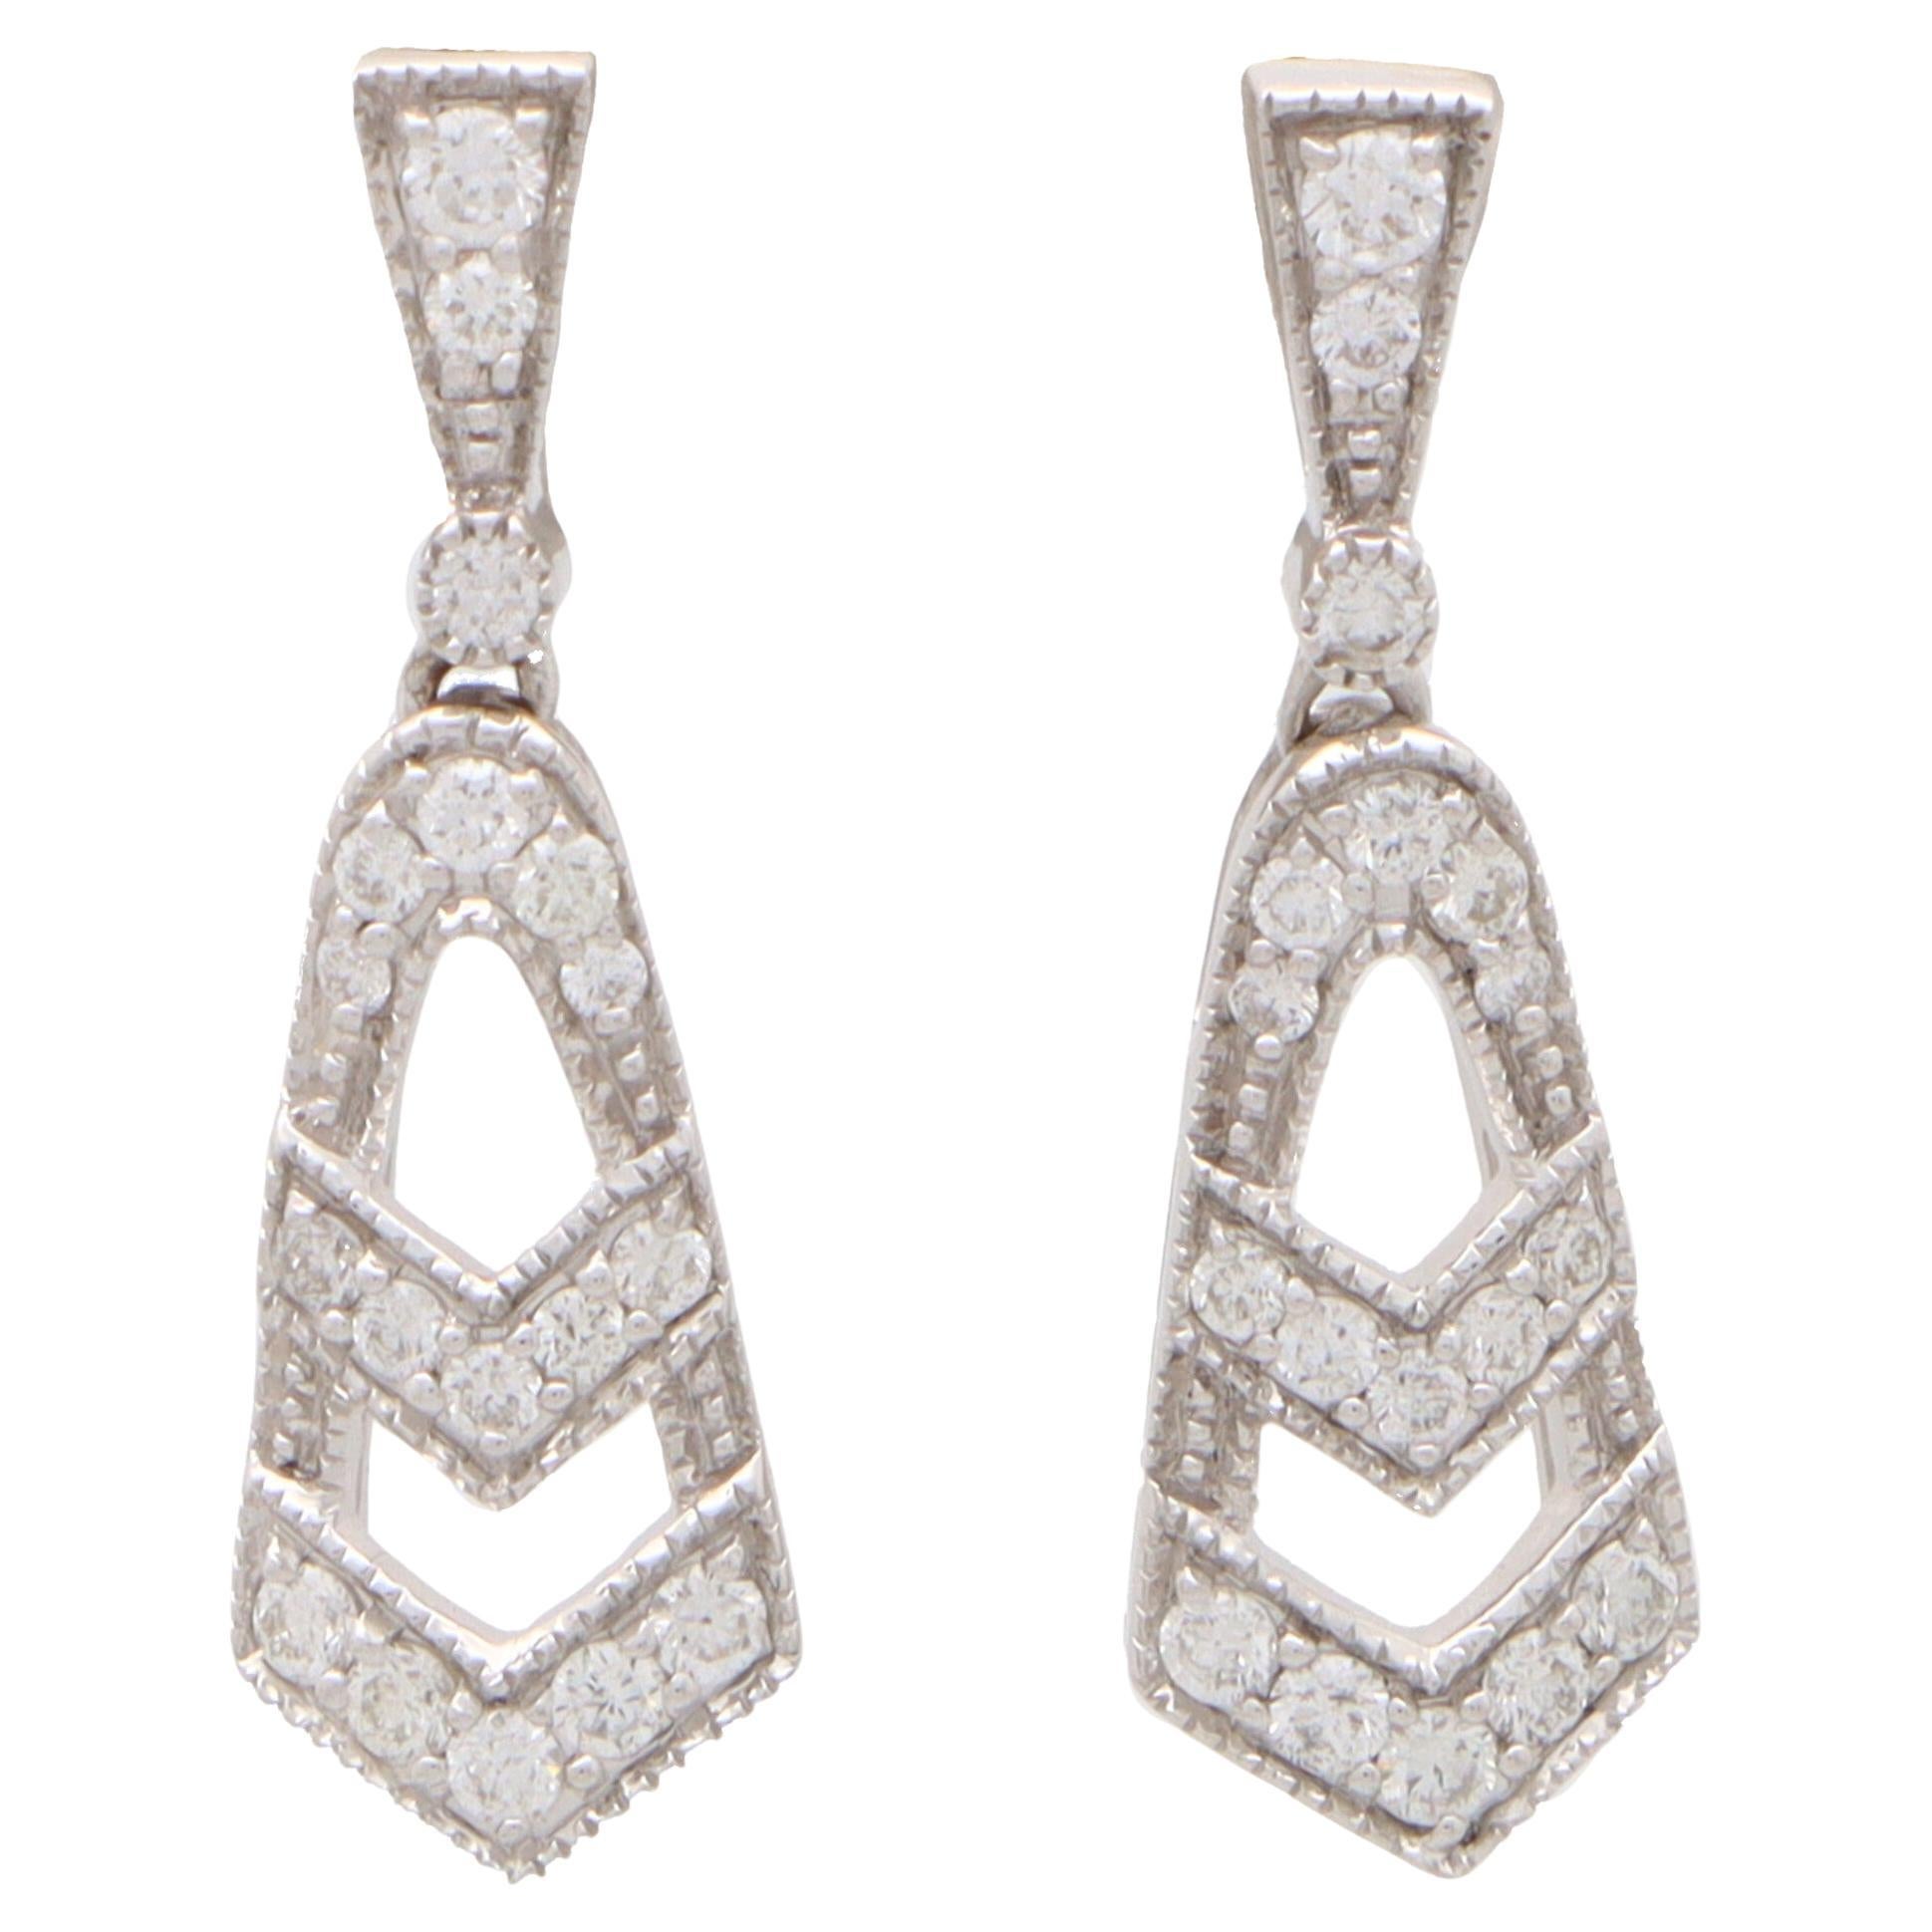 Art Deco Inspired Diamond Drop Earrings Set in 18k in White Gold